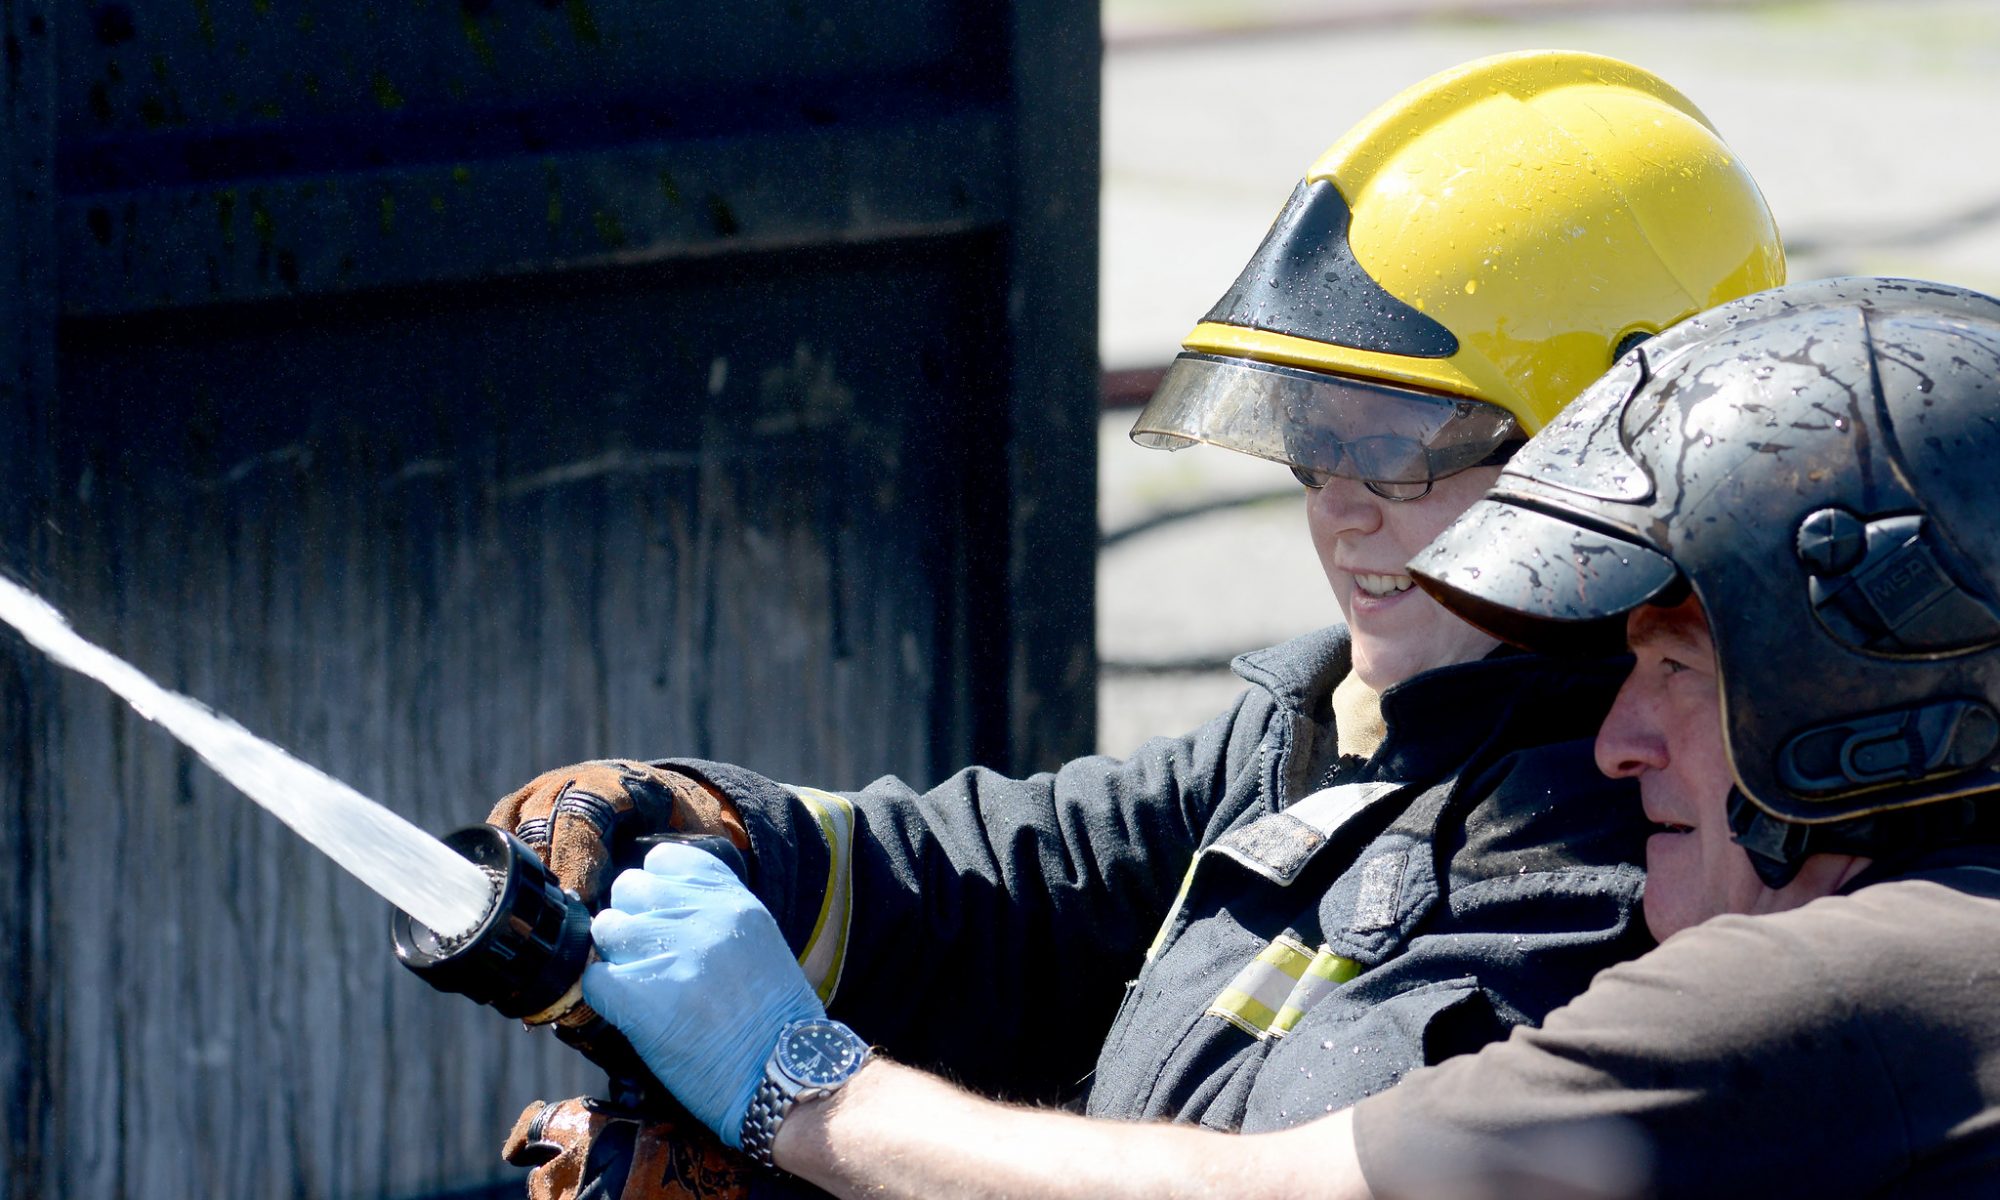 Fire hose handling training